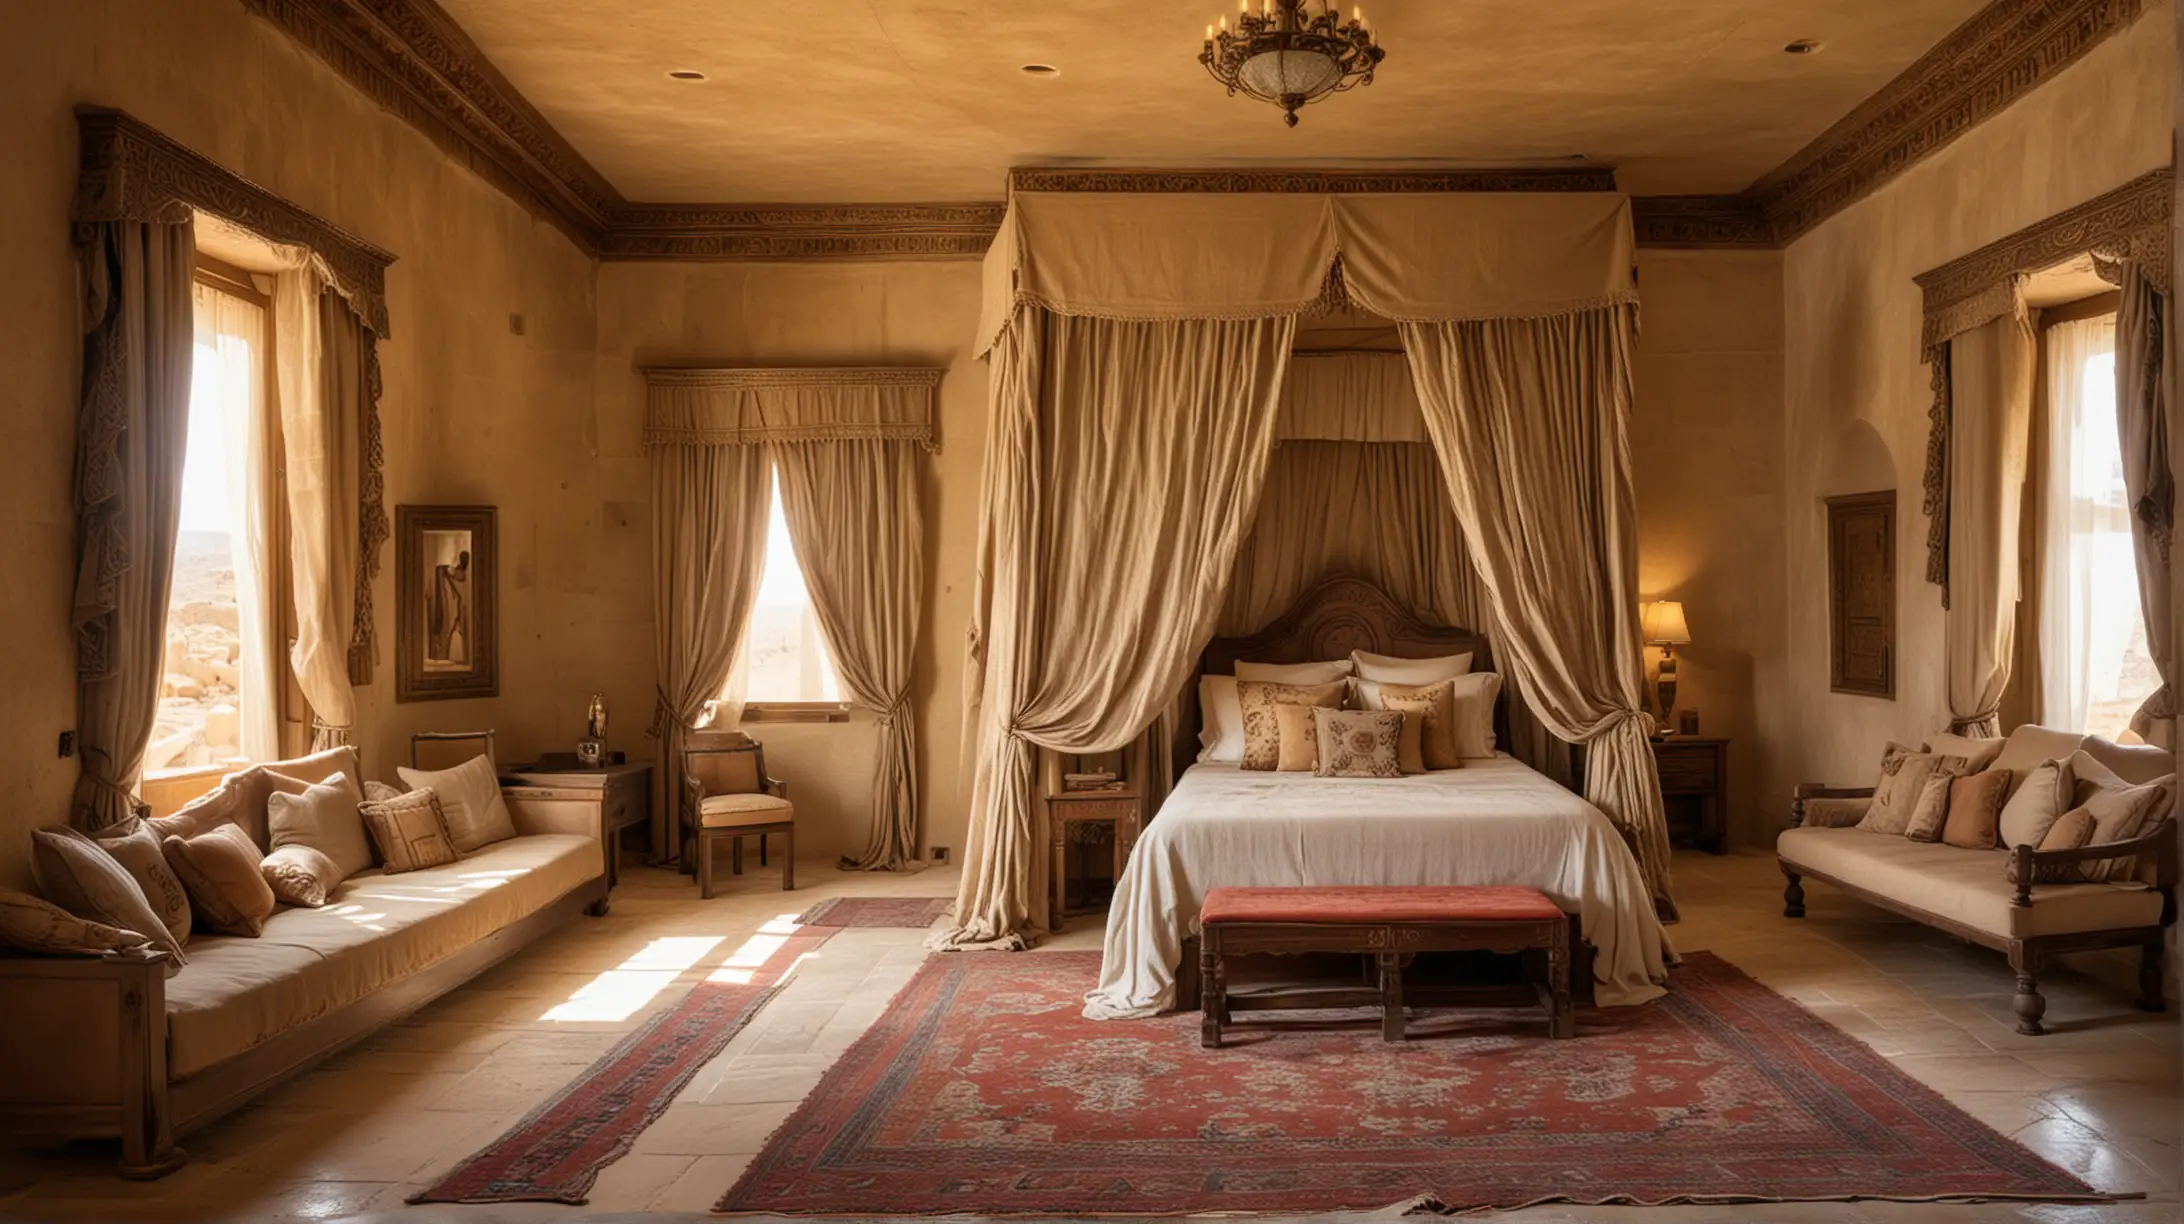 Luxurious Ancient Desert Bedroom Inspired by King Davids Era